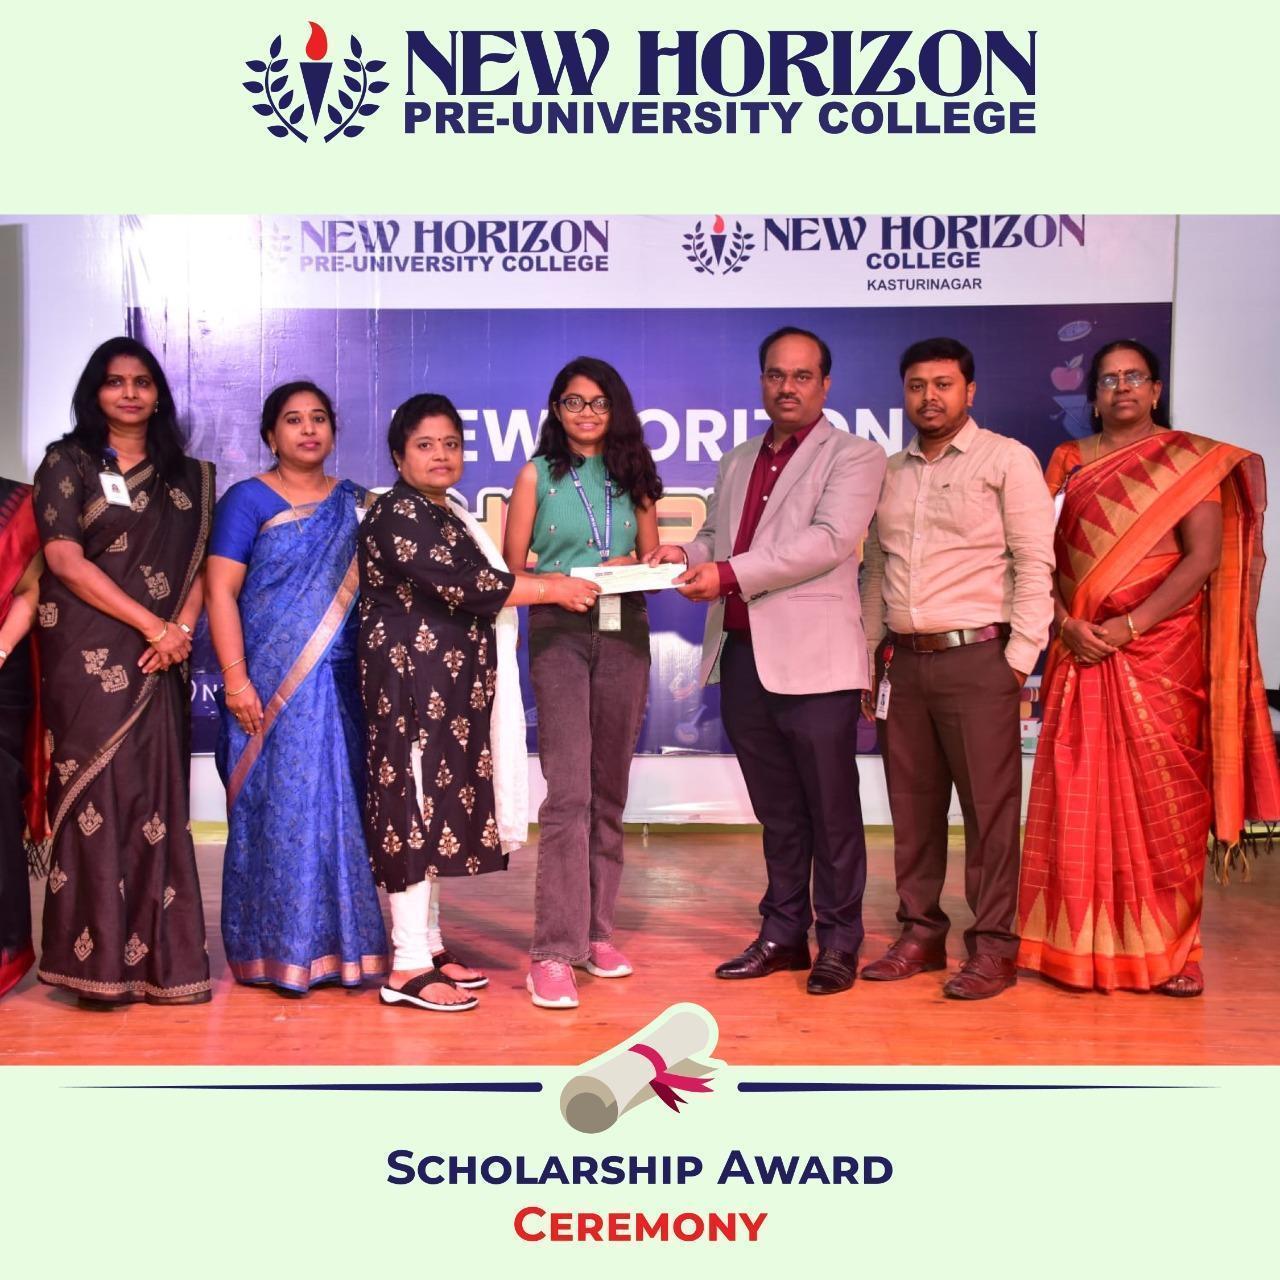 Scholarship Award Ceremony at New Horizon Pre-University College